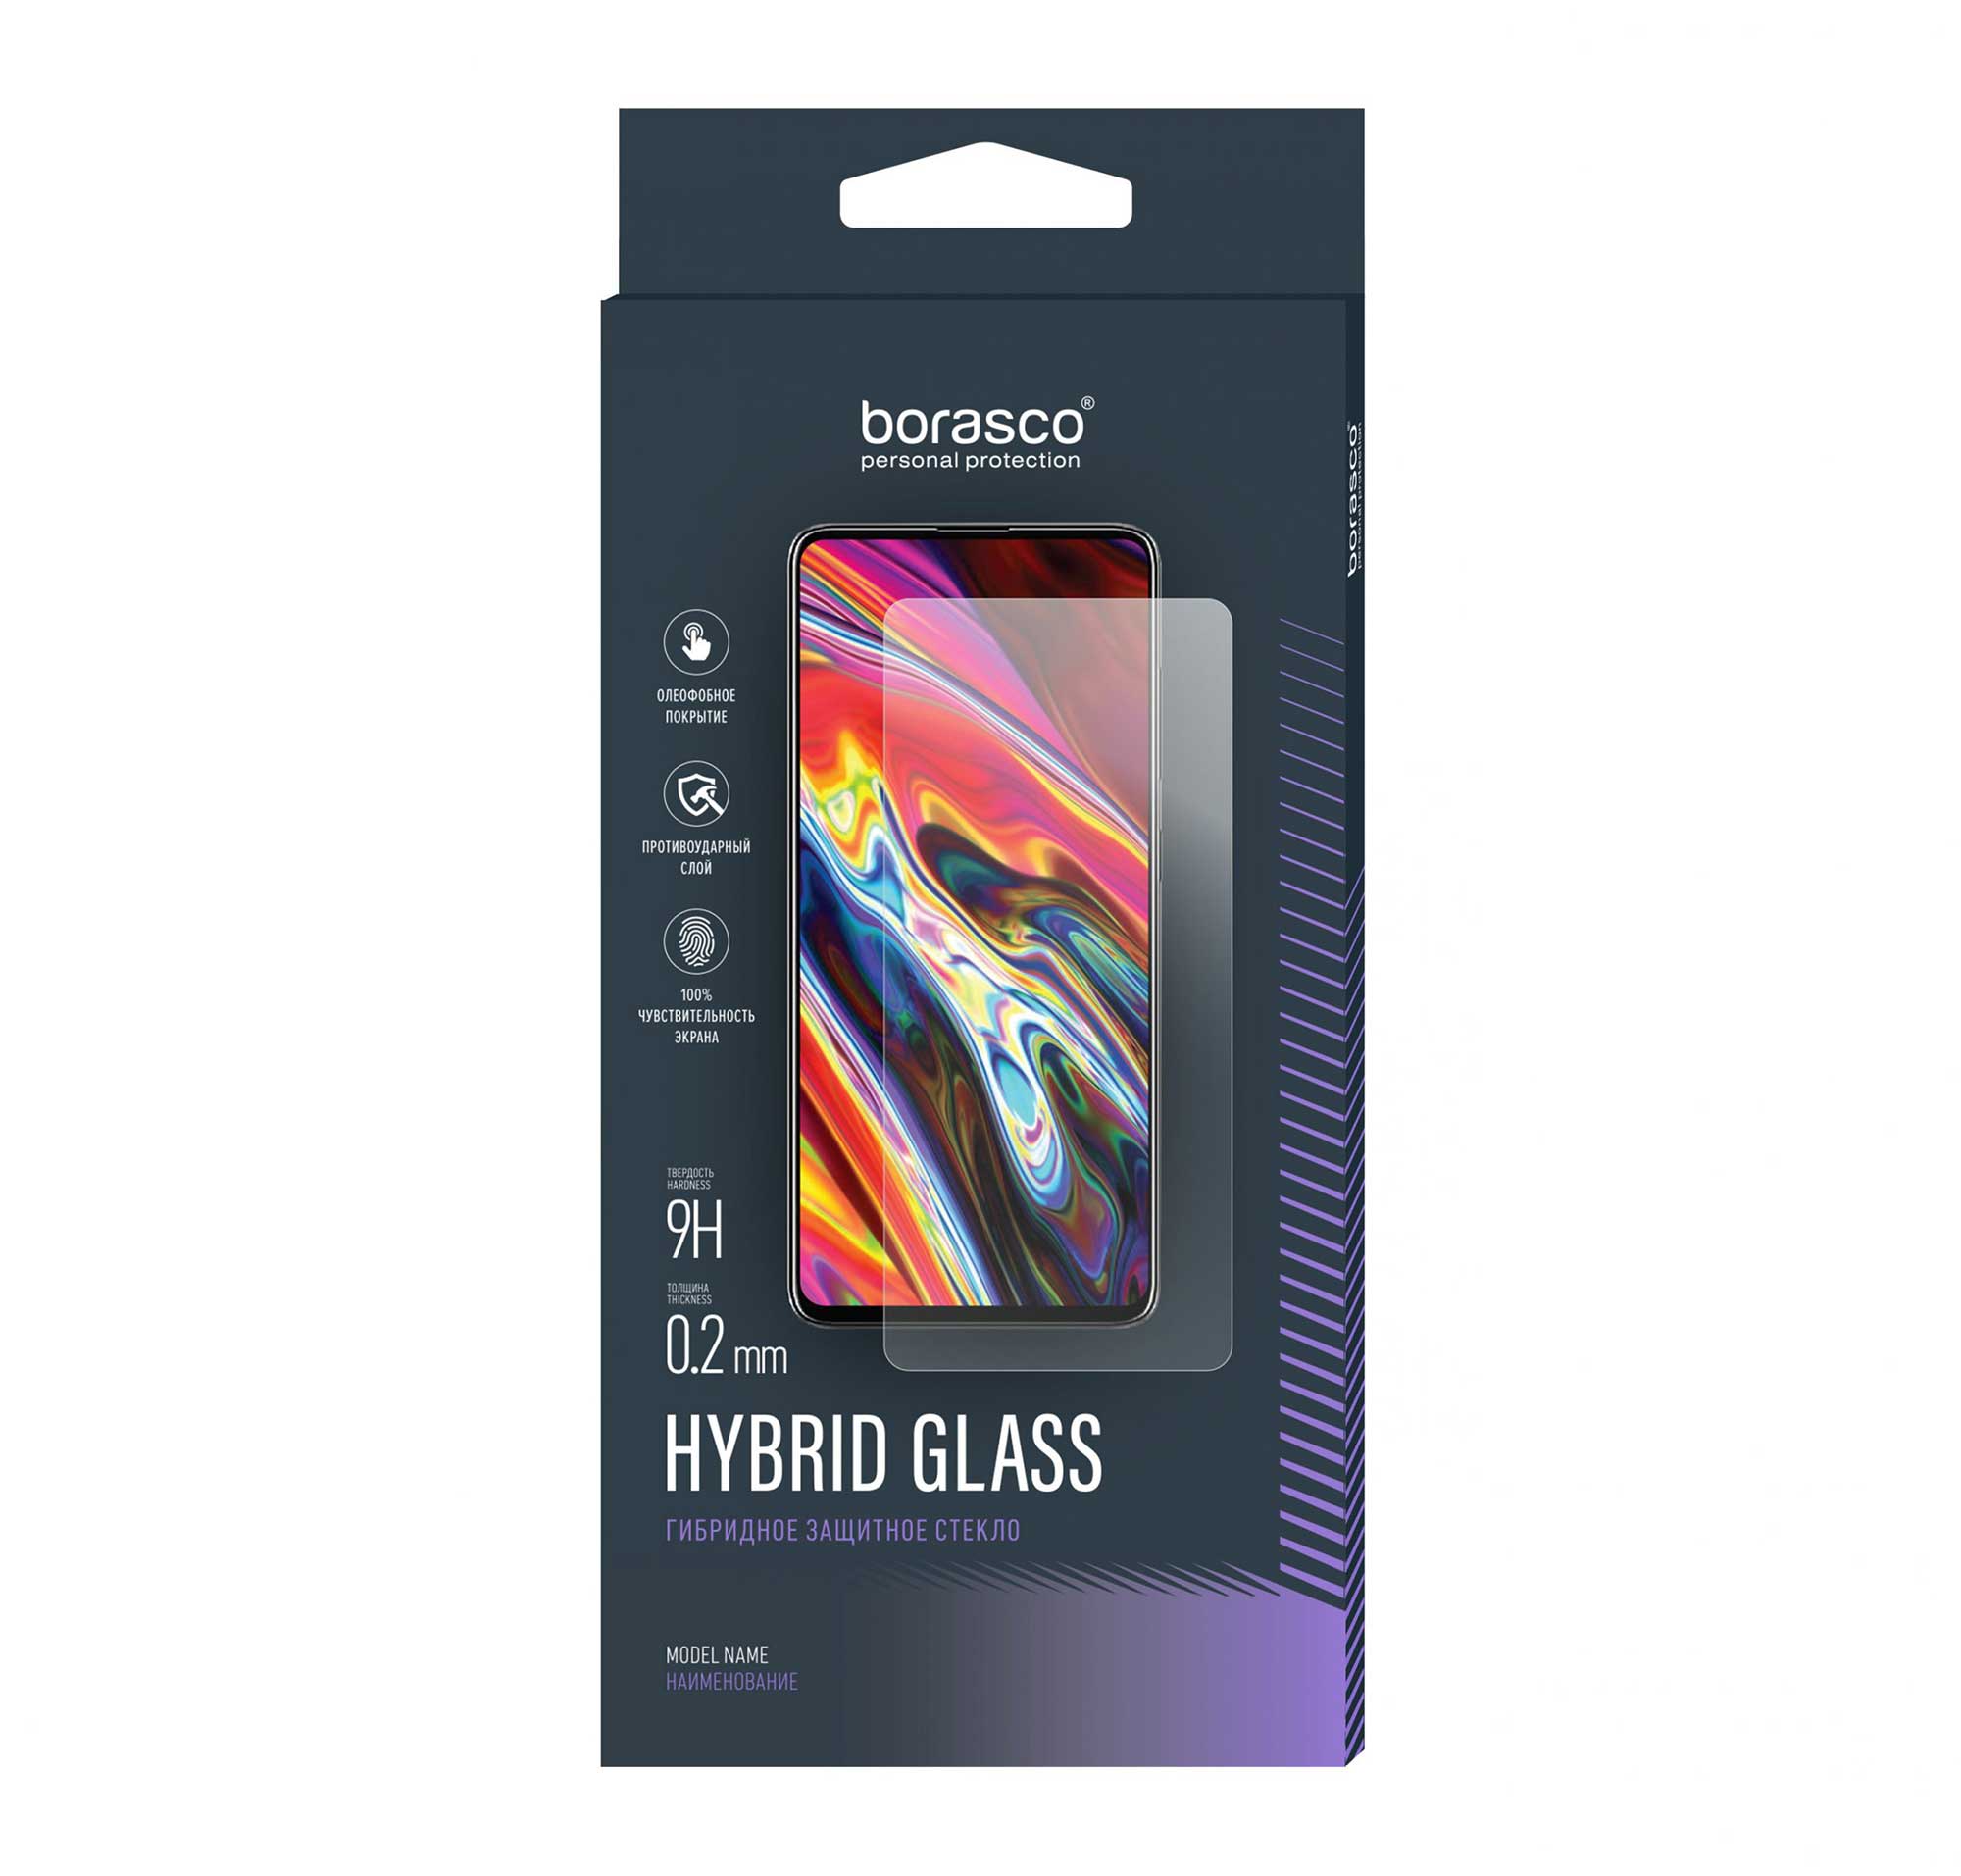 Защитное стекло BoraSCO Hybrid Glass для BQ 6040L Magic пленка защитная uv glass для задней панели для bq 6040l magic